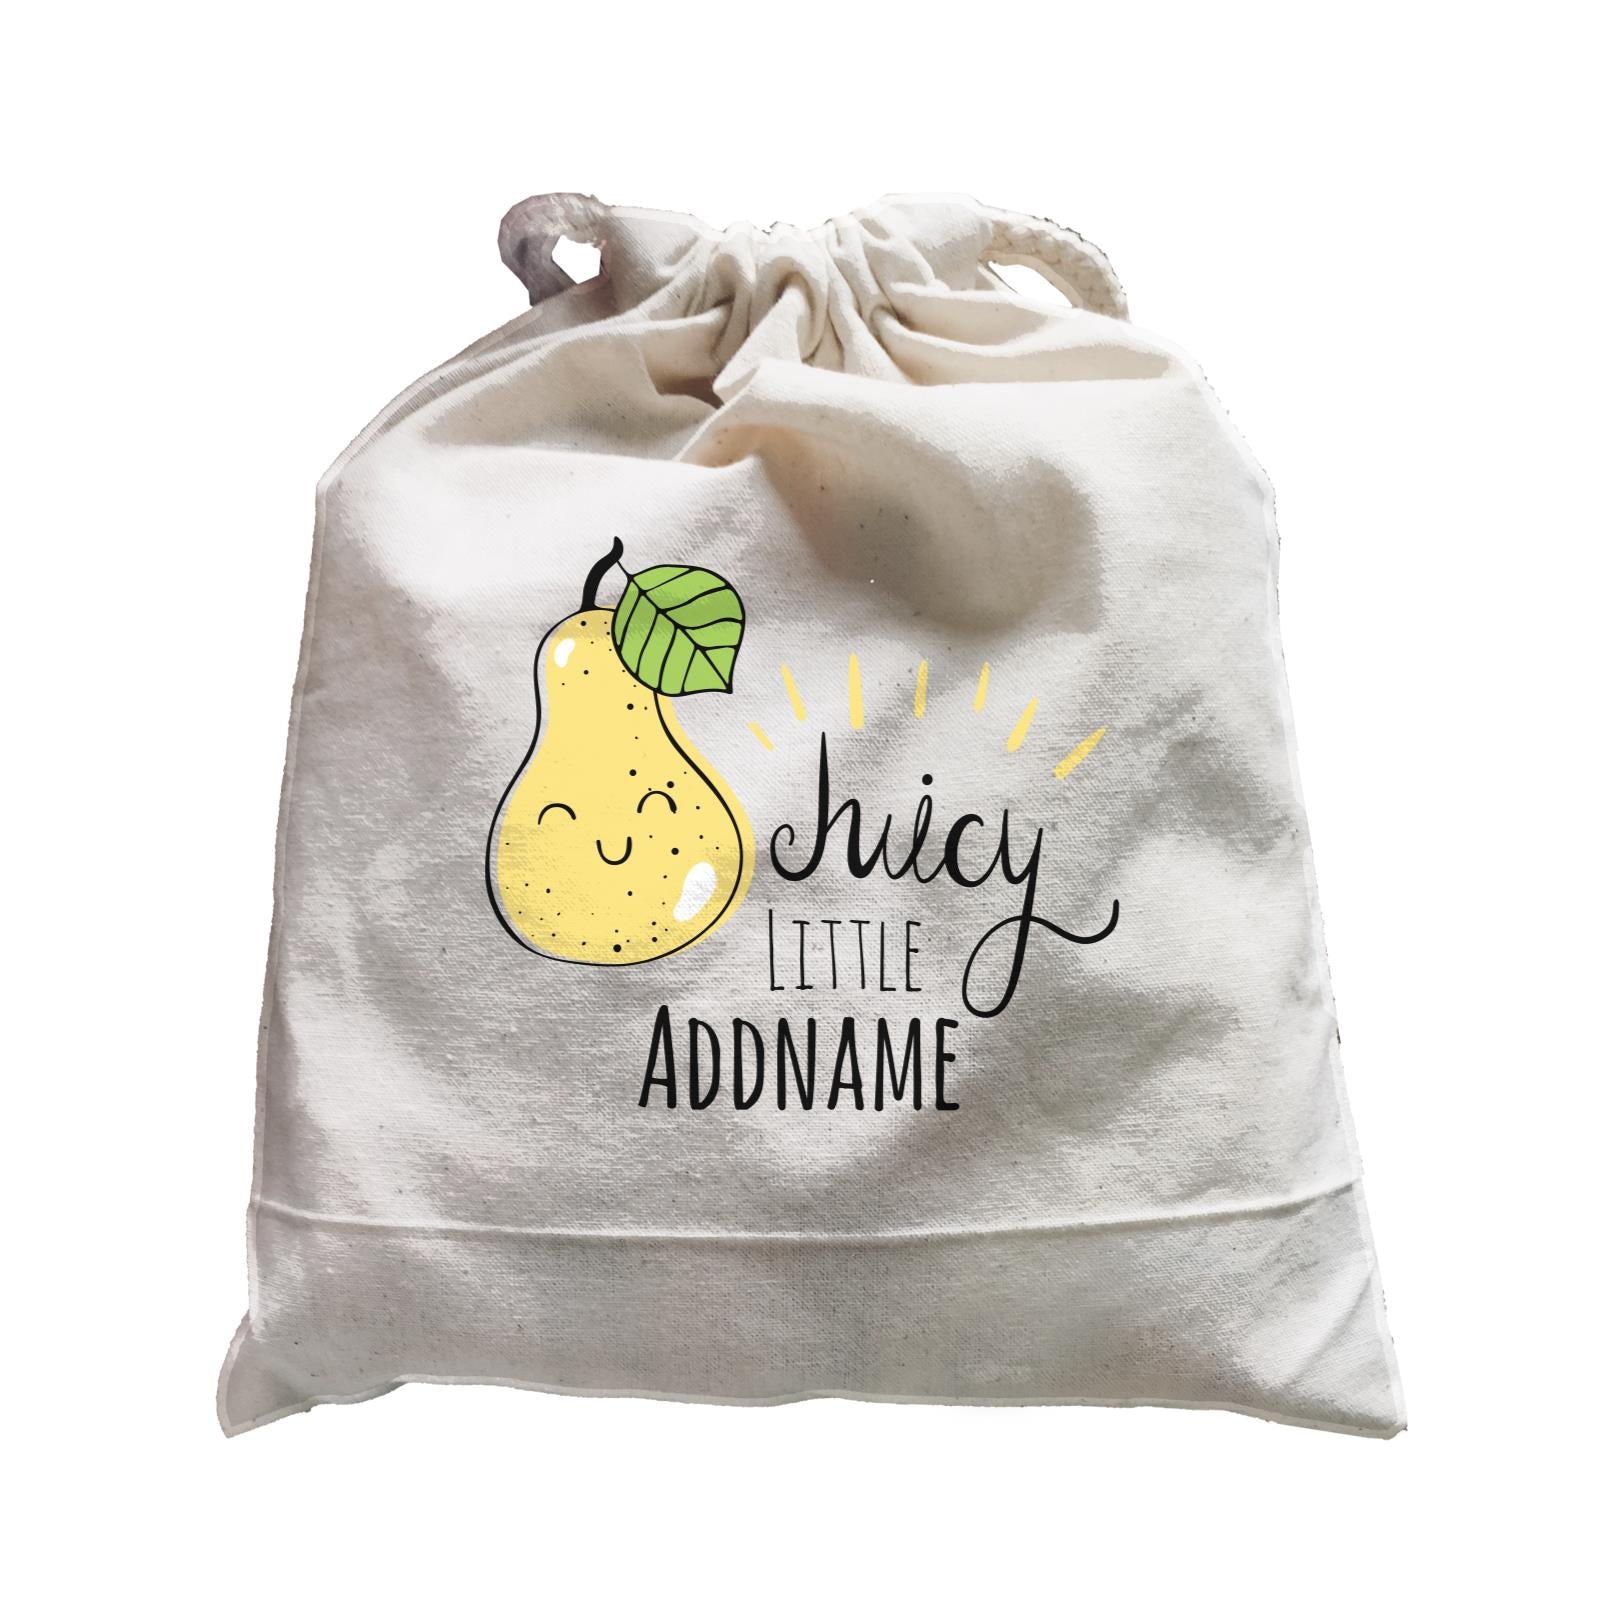 Drawn Sweet Snacks Juicy Little Pear Addname Satchel